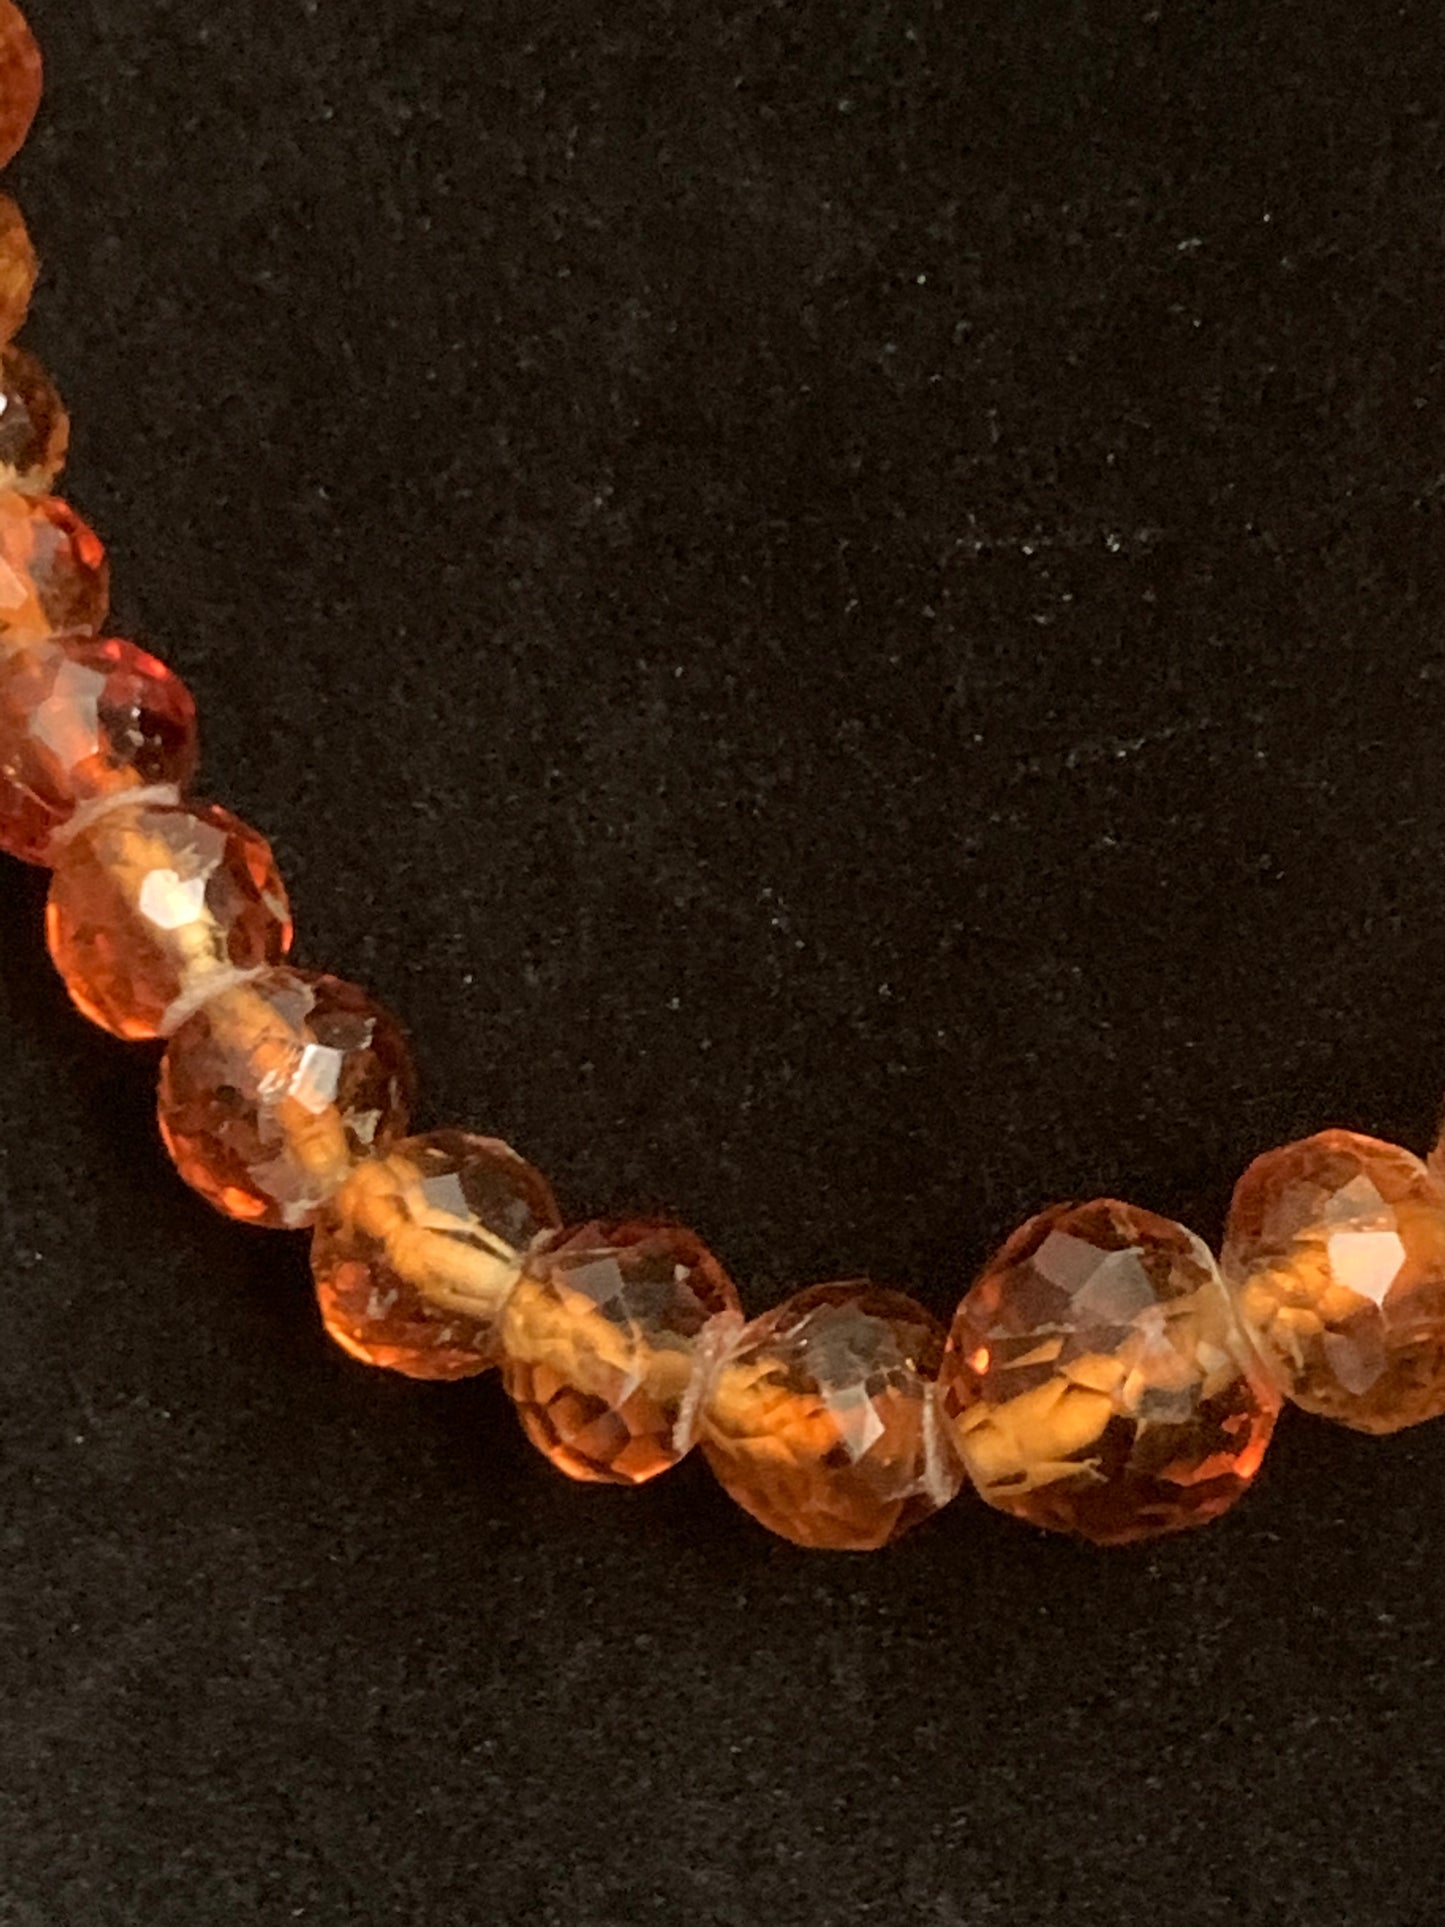 Vintage faceted amber necklace